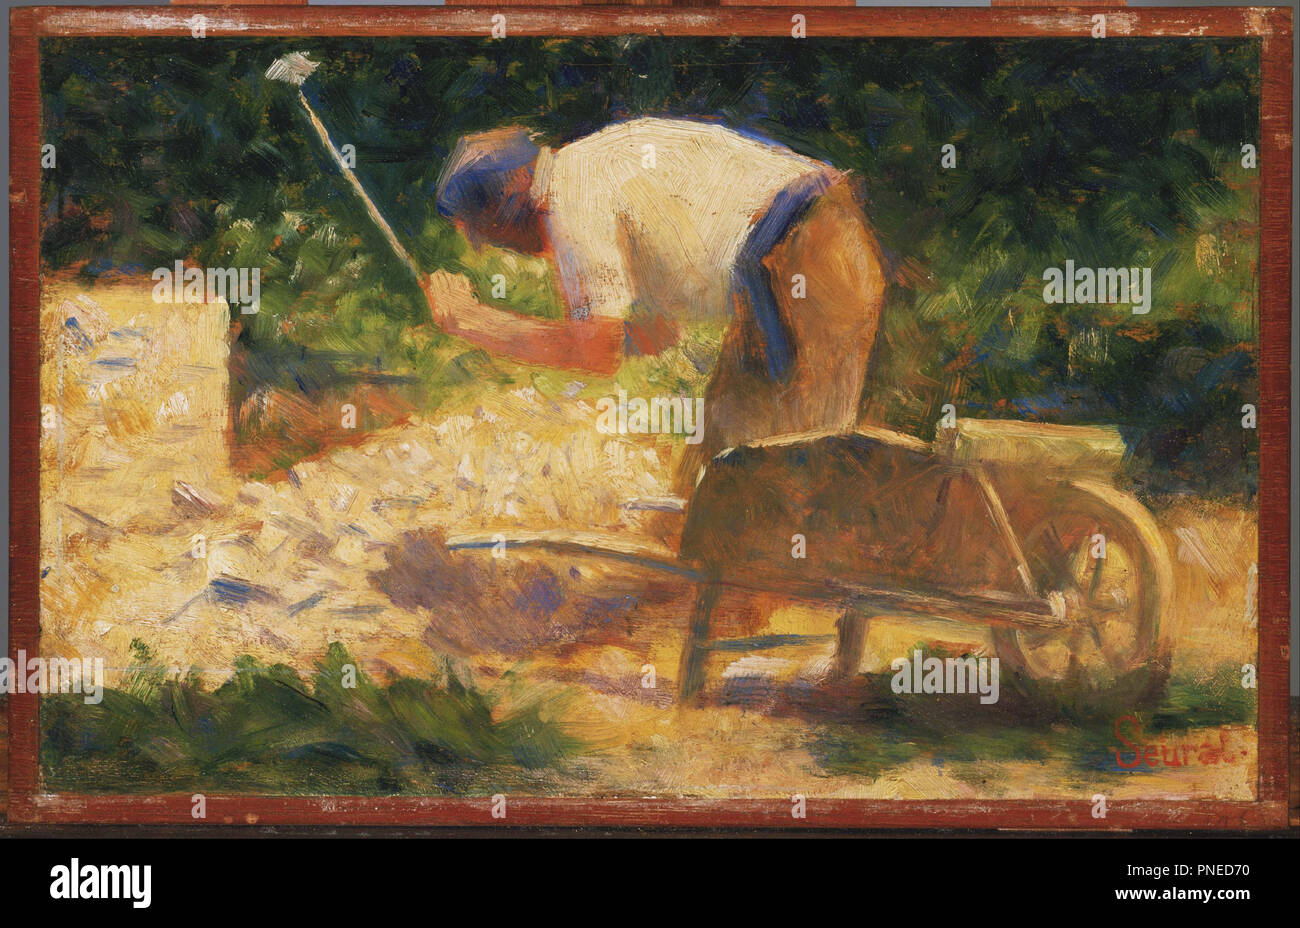 La rompepiedras. Fecha/período: 1882. La pintura. Óleo sobre panel de madera. Altura: 6,13 mm (0,24 pulg.); ancho: 9,75 mm (0,38 pulgadas). Autor: Georges Seurat. SEURAT, Georges. Foto de stock